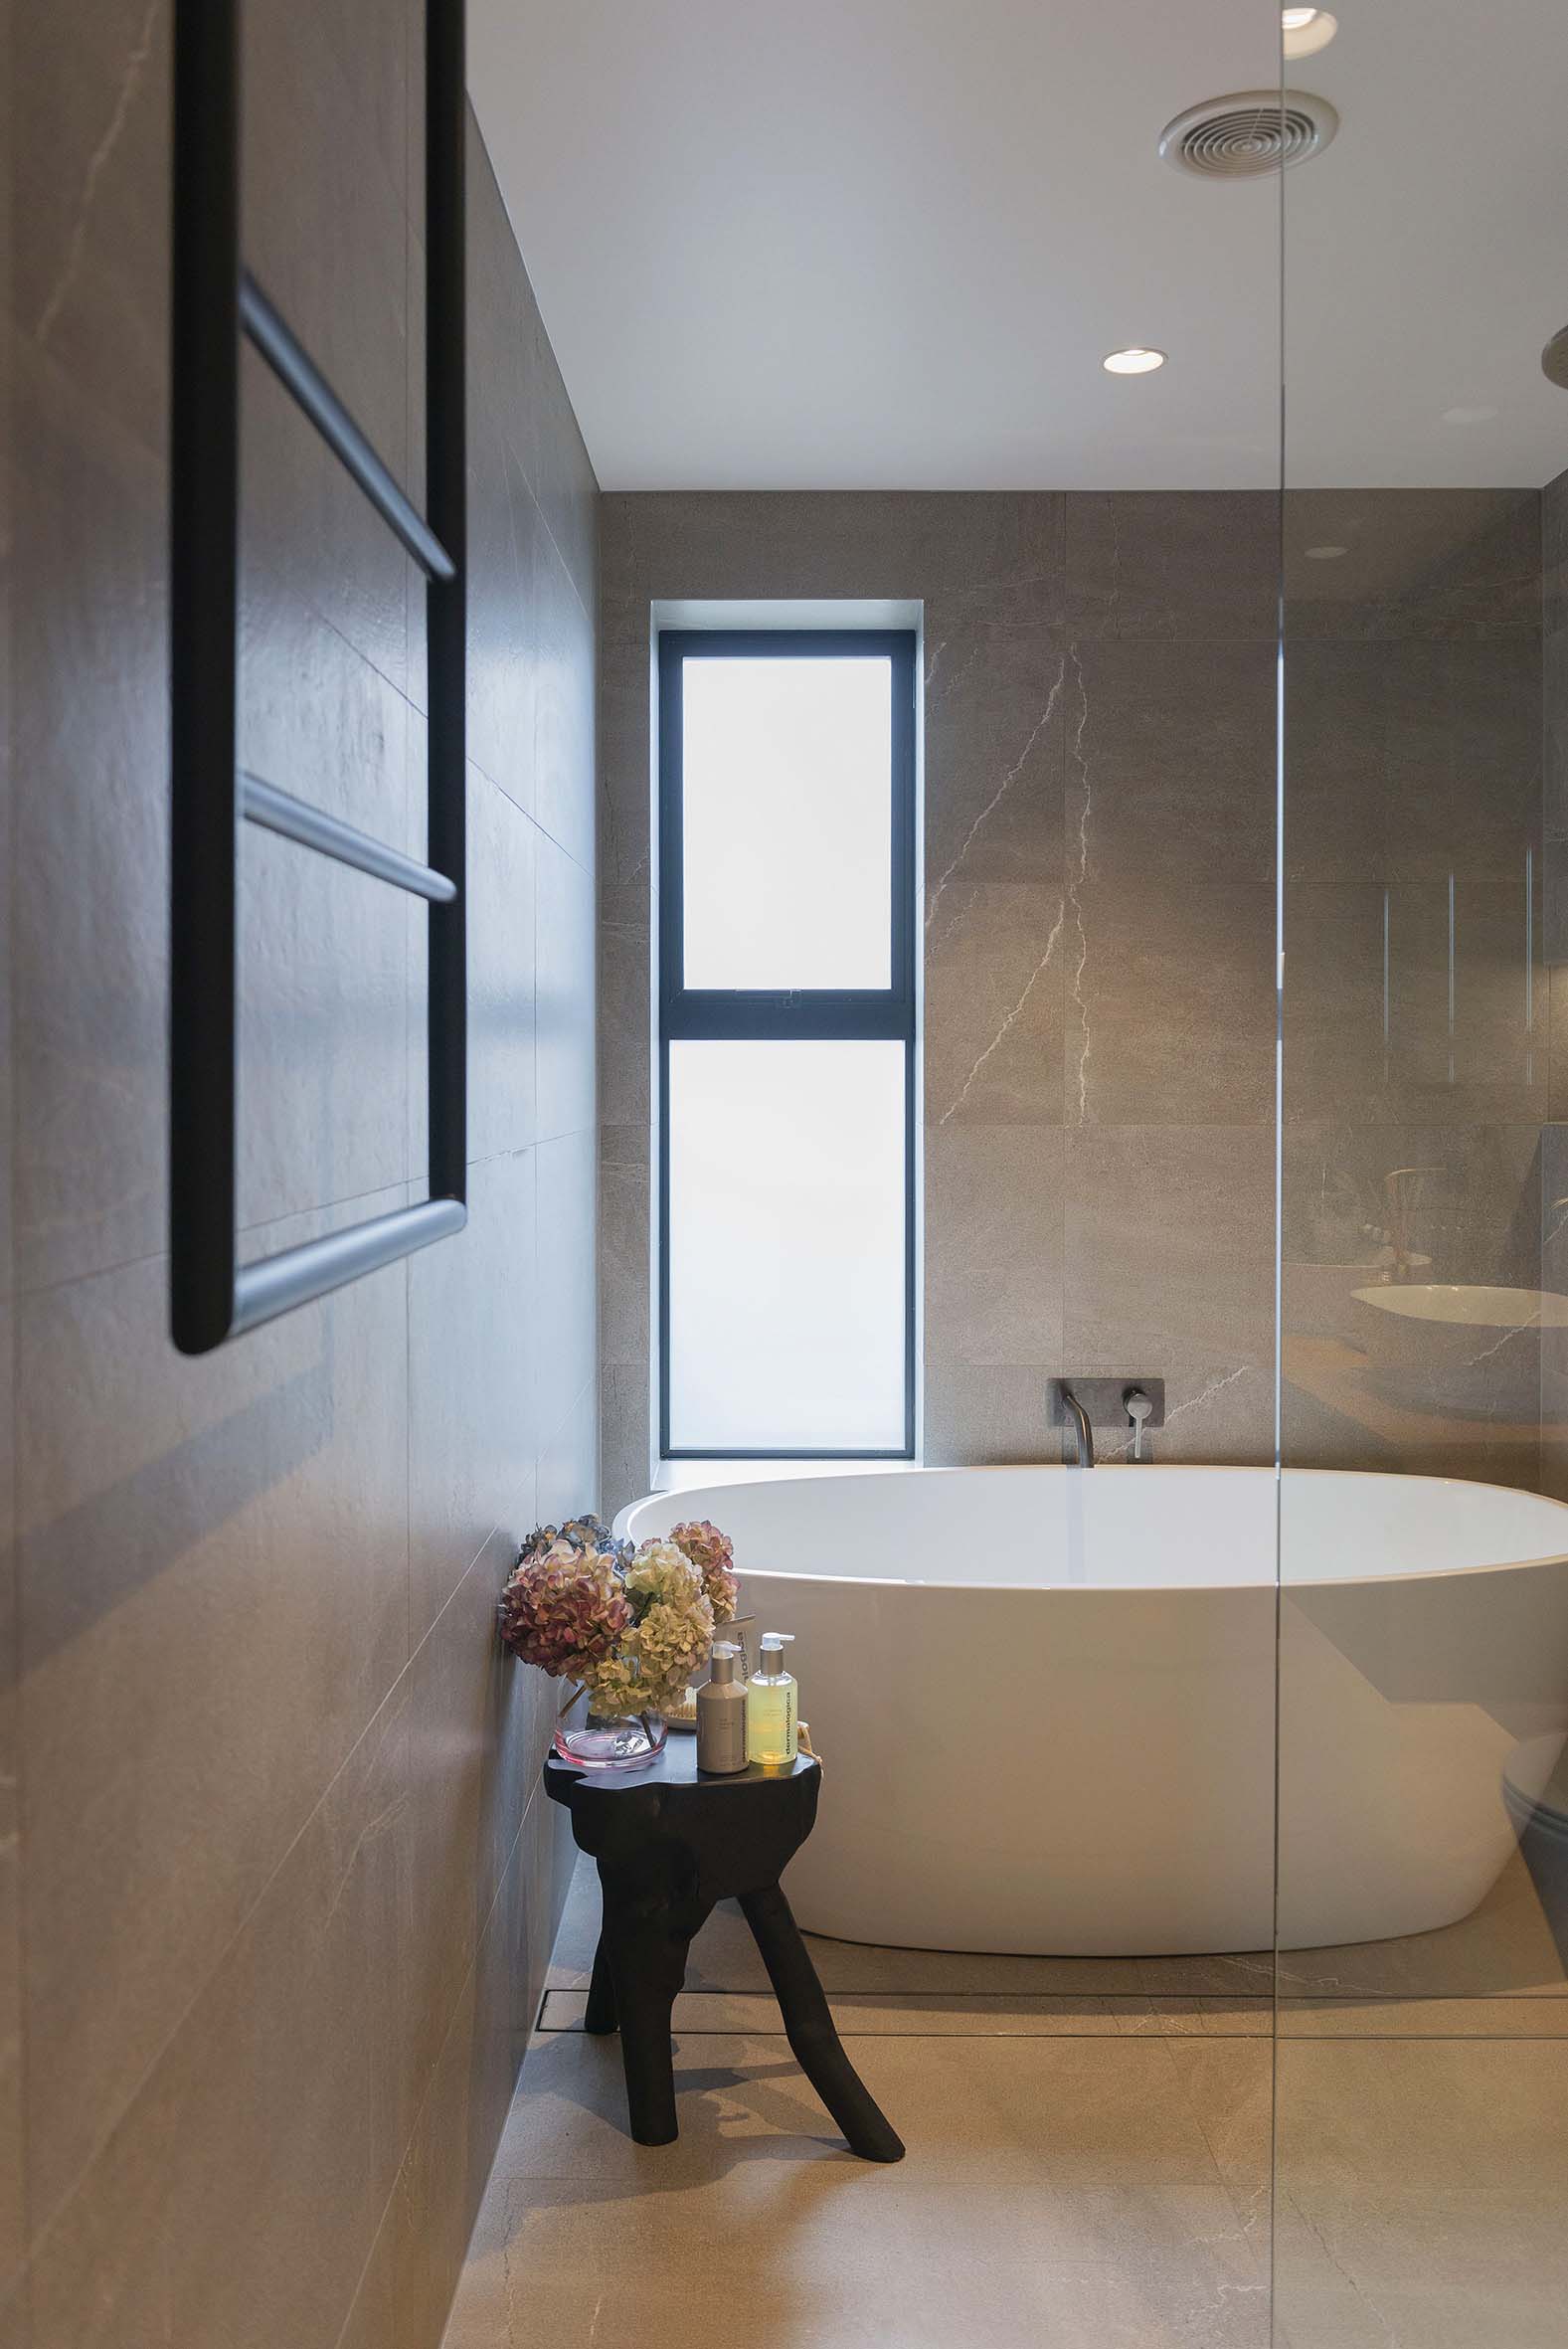 Bathroom with light grey tiles and a large bathtub